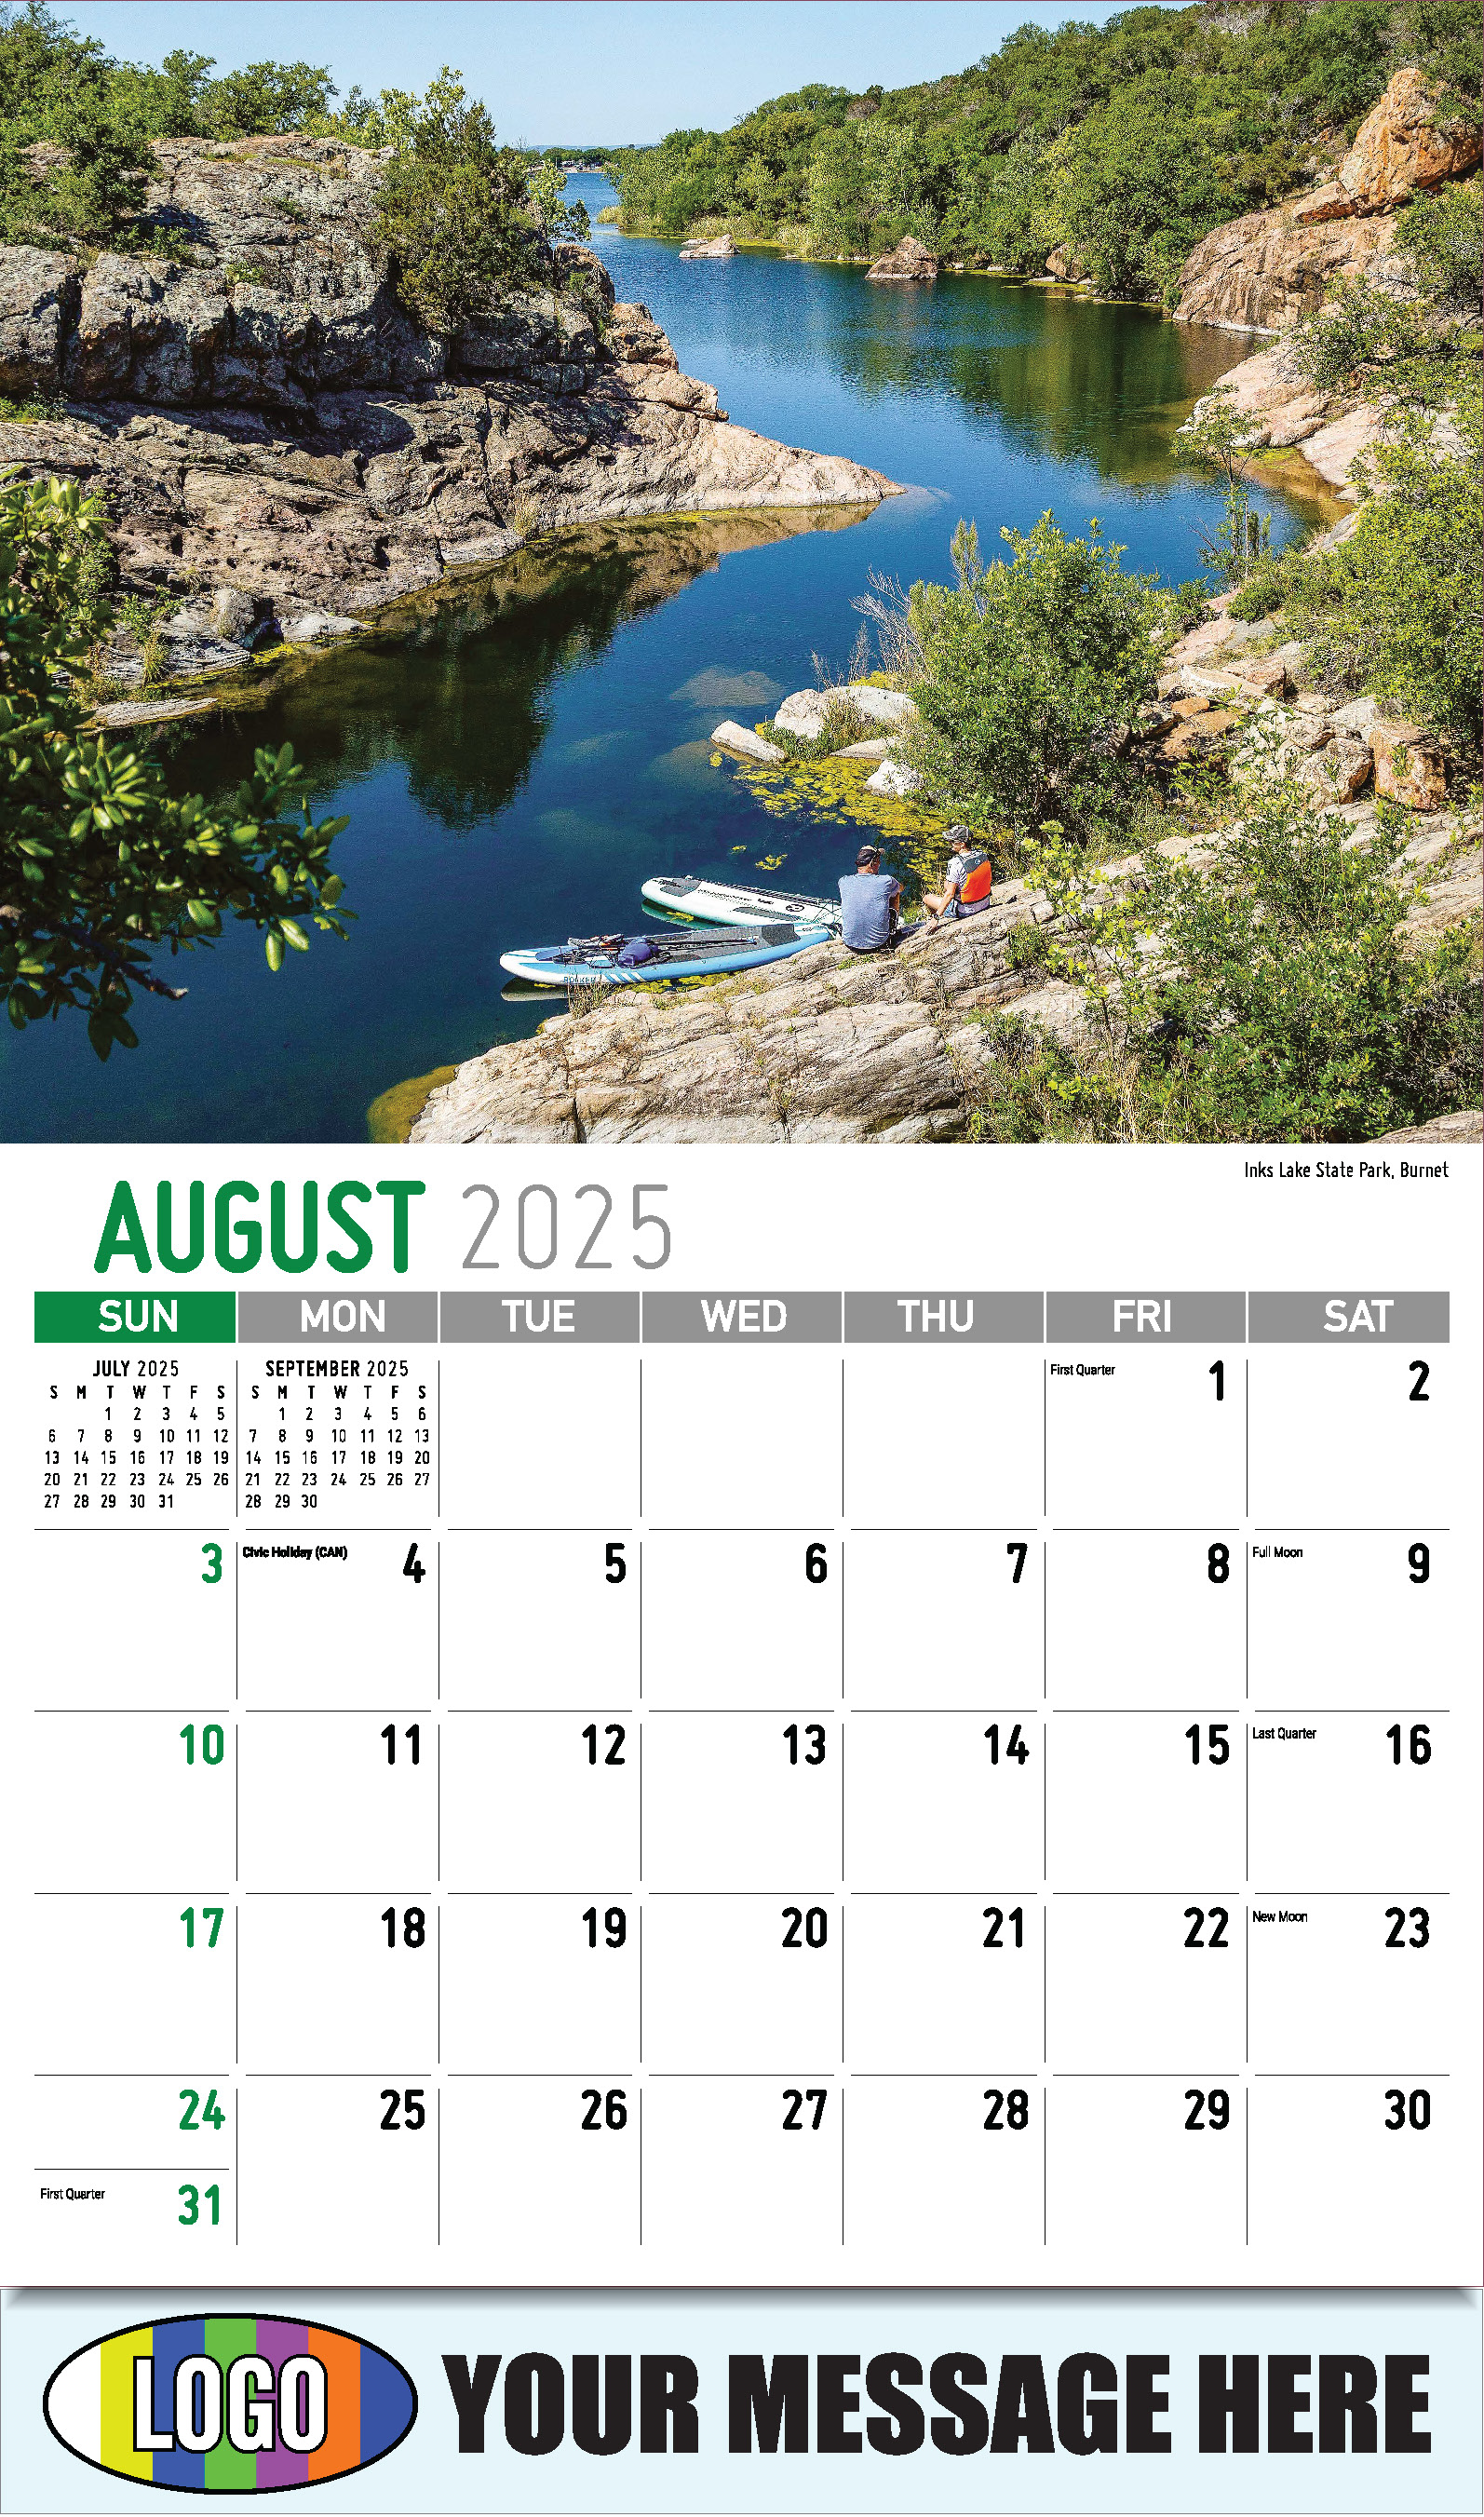 Scenes of Texas 2025 Business Advertising Calendar - August